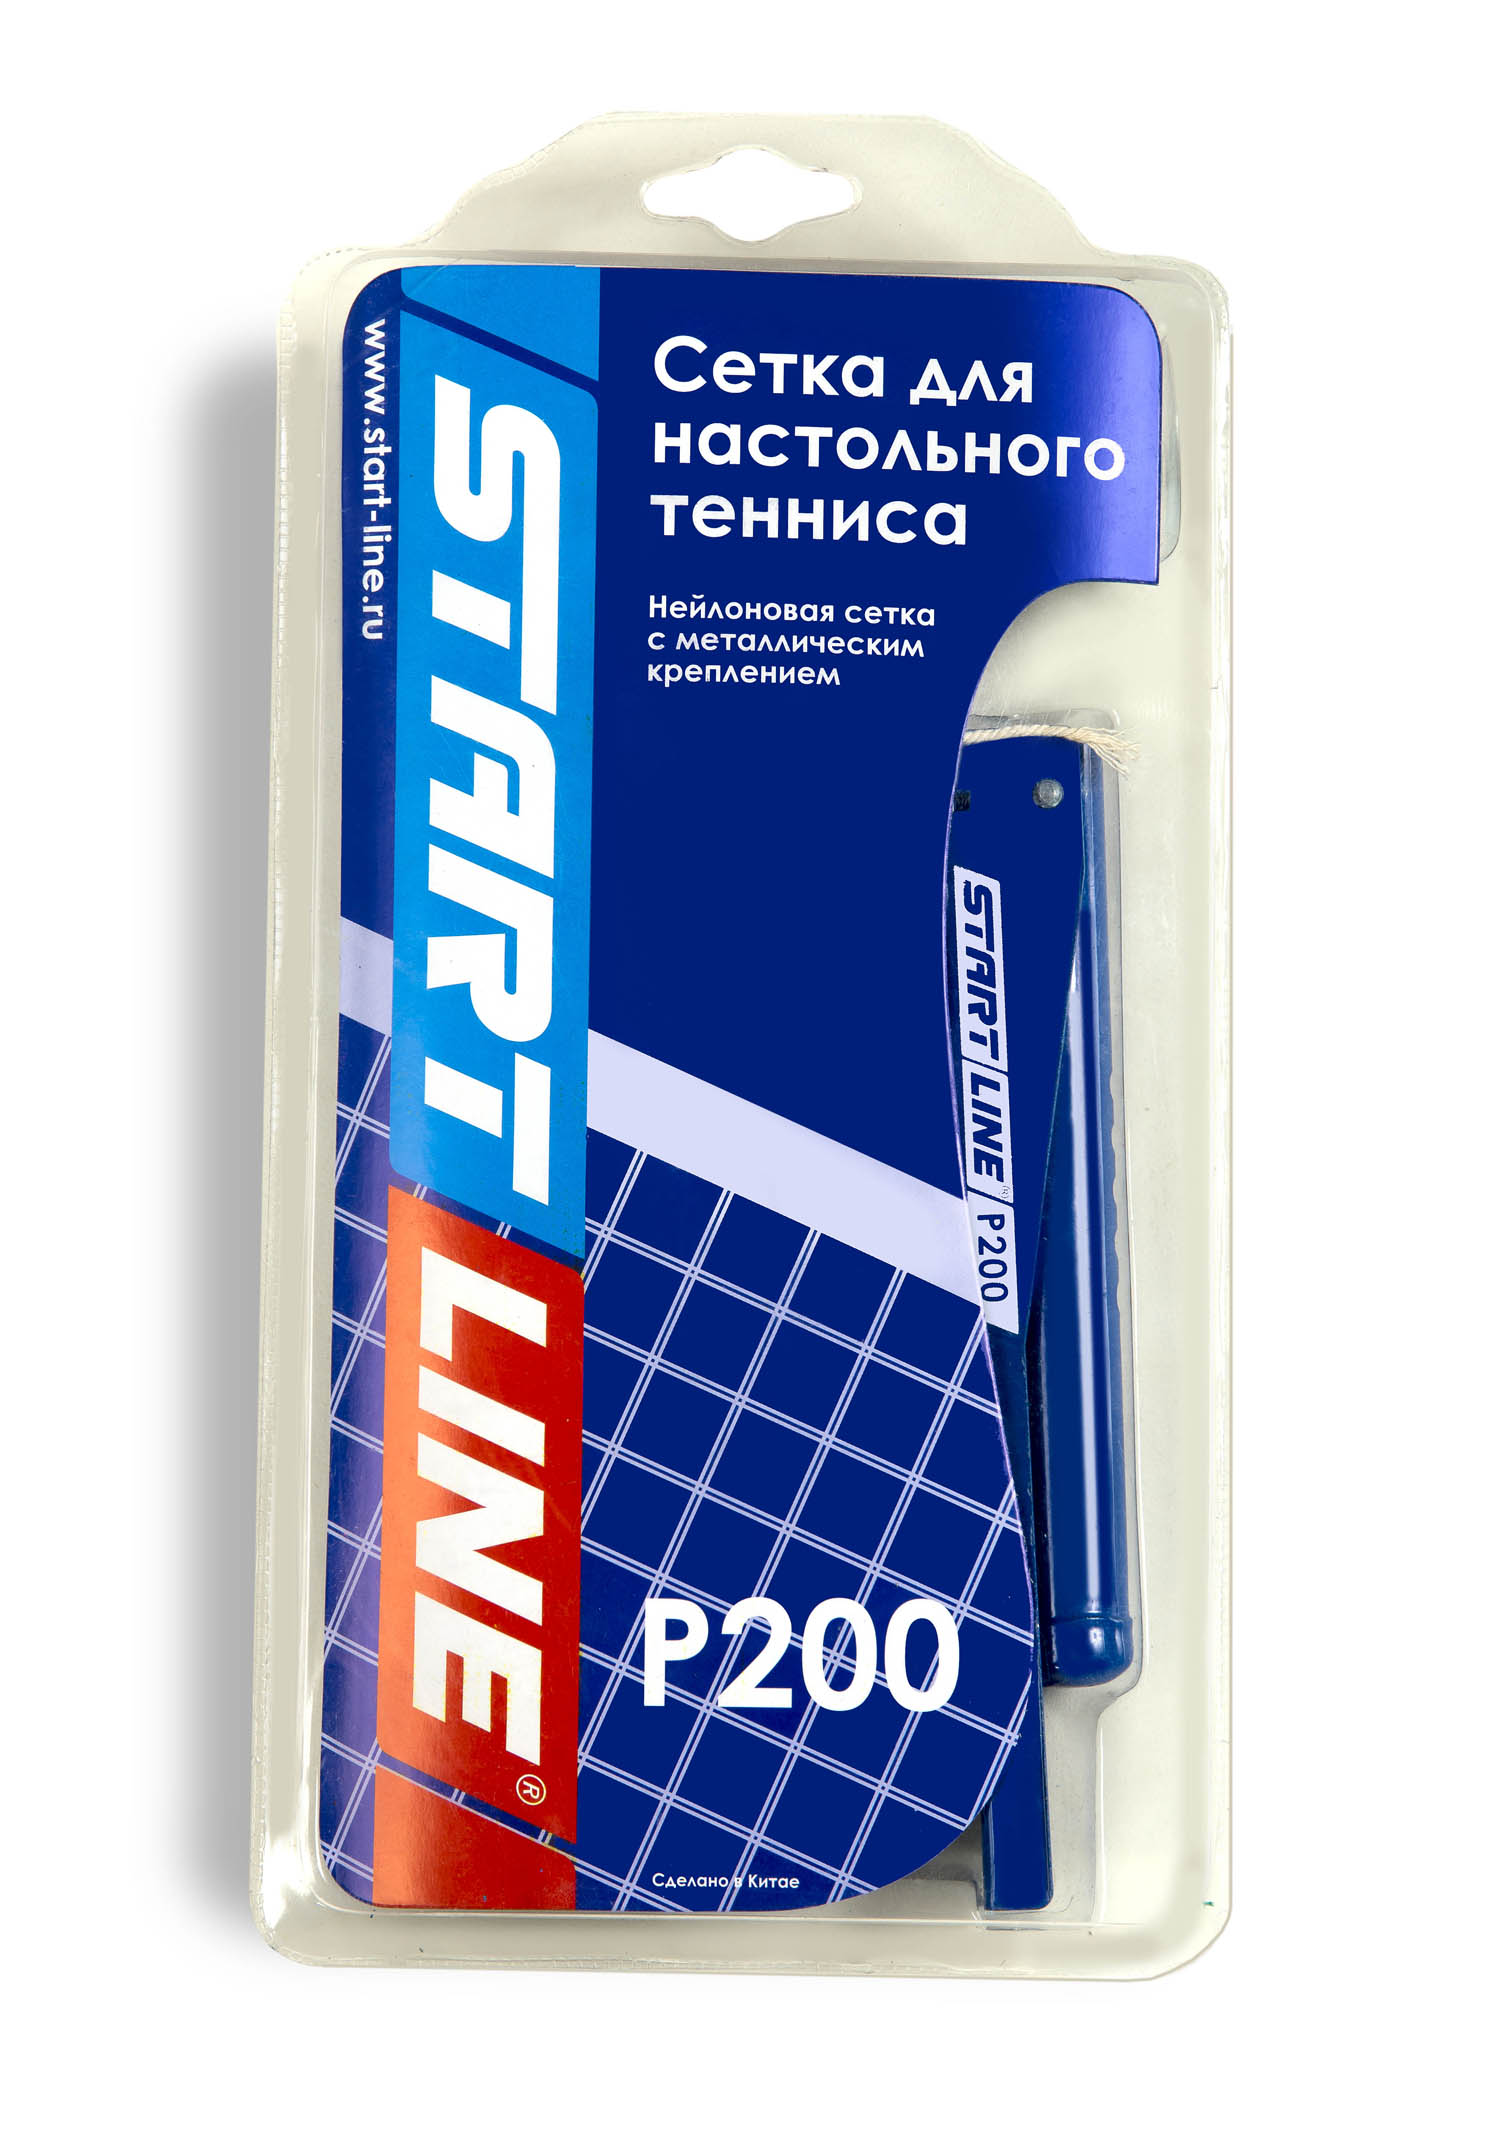 Теннисная сетка StartLine CLASSIC